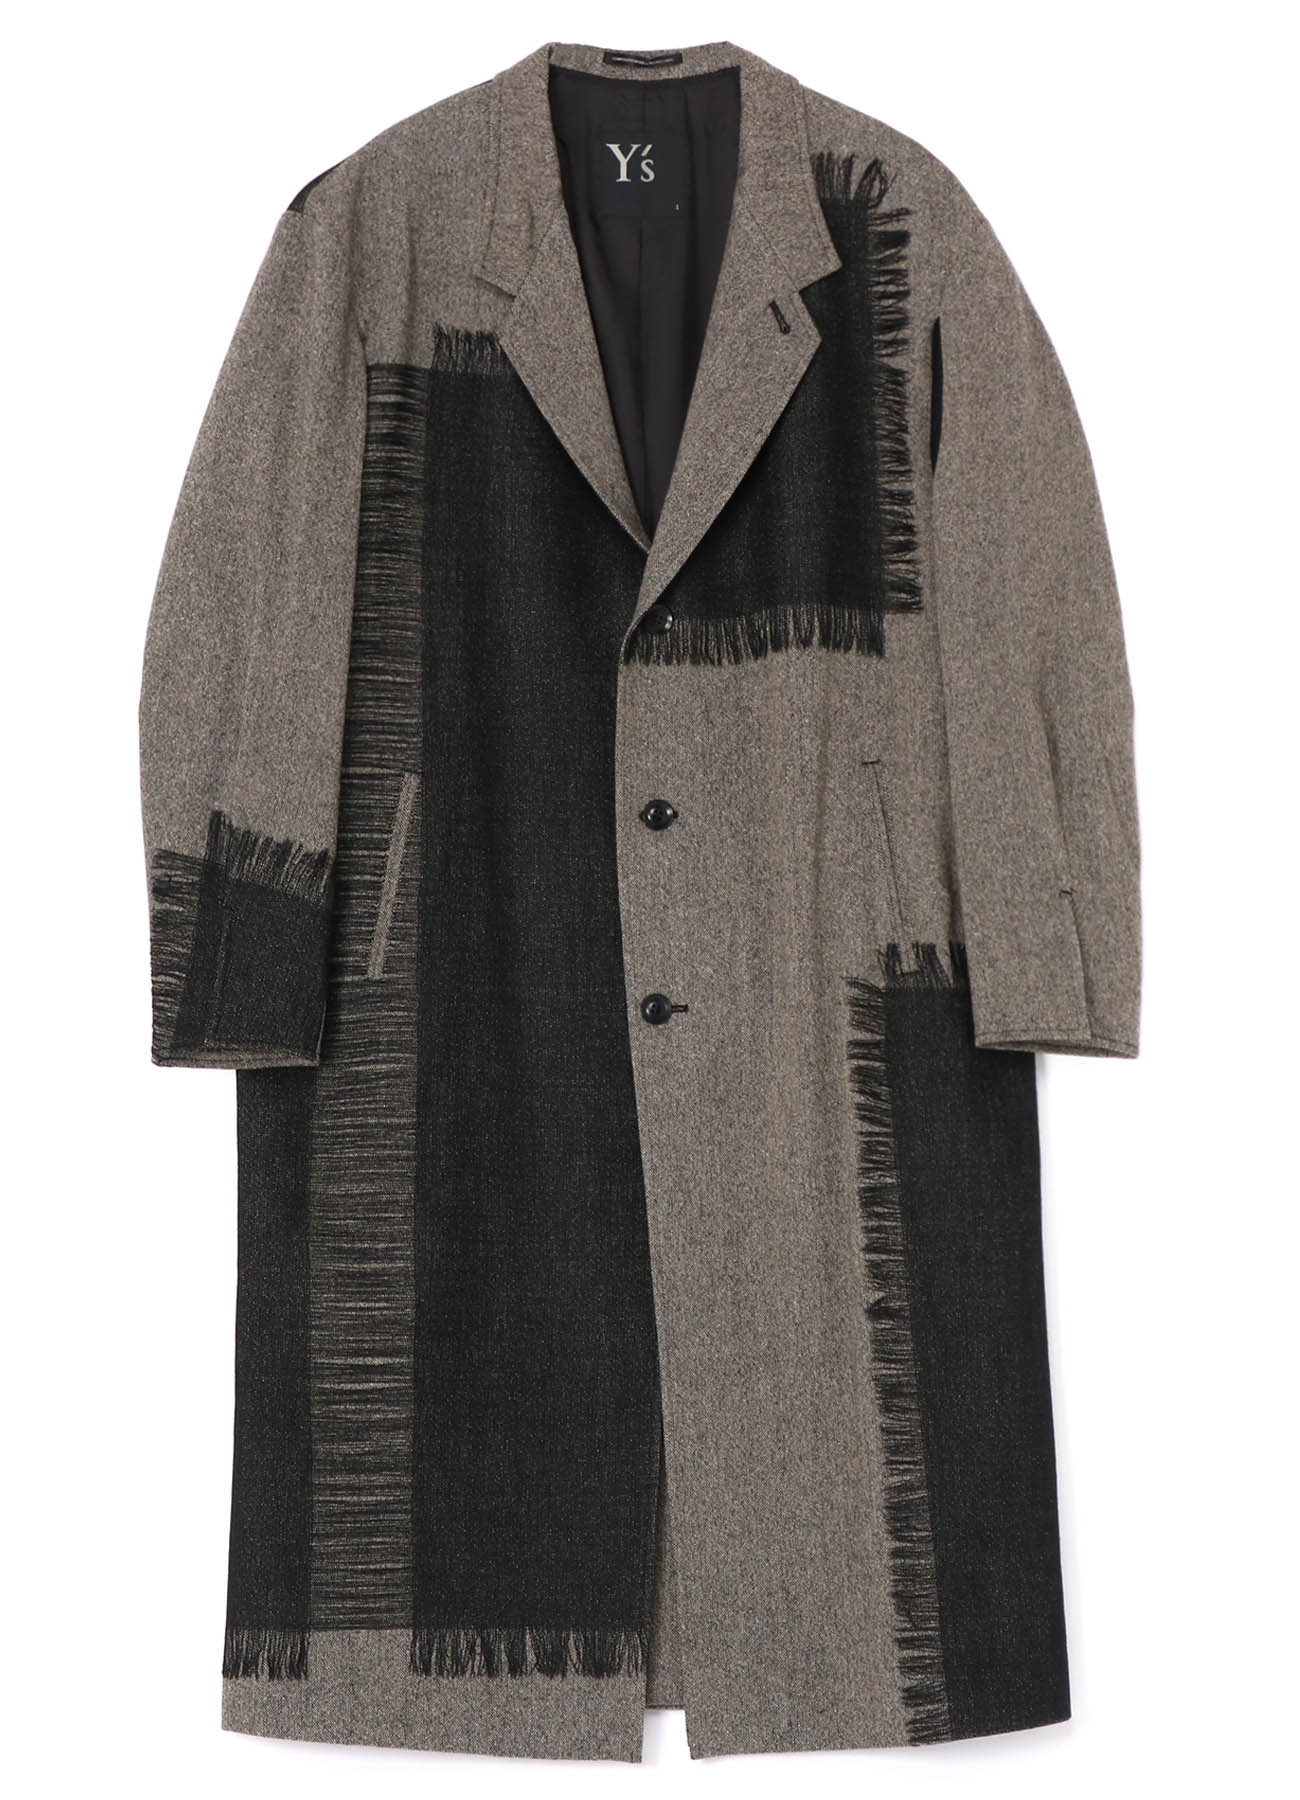 Y’s Yohji Yamamoto wool coat